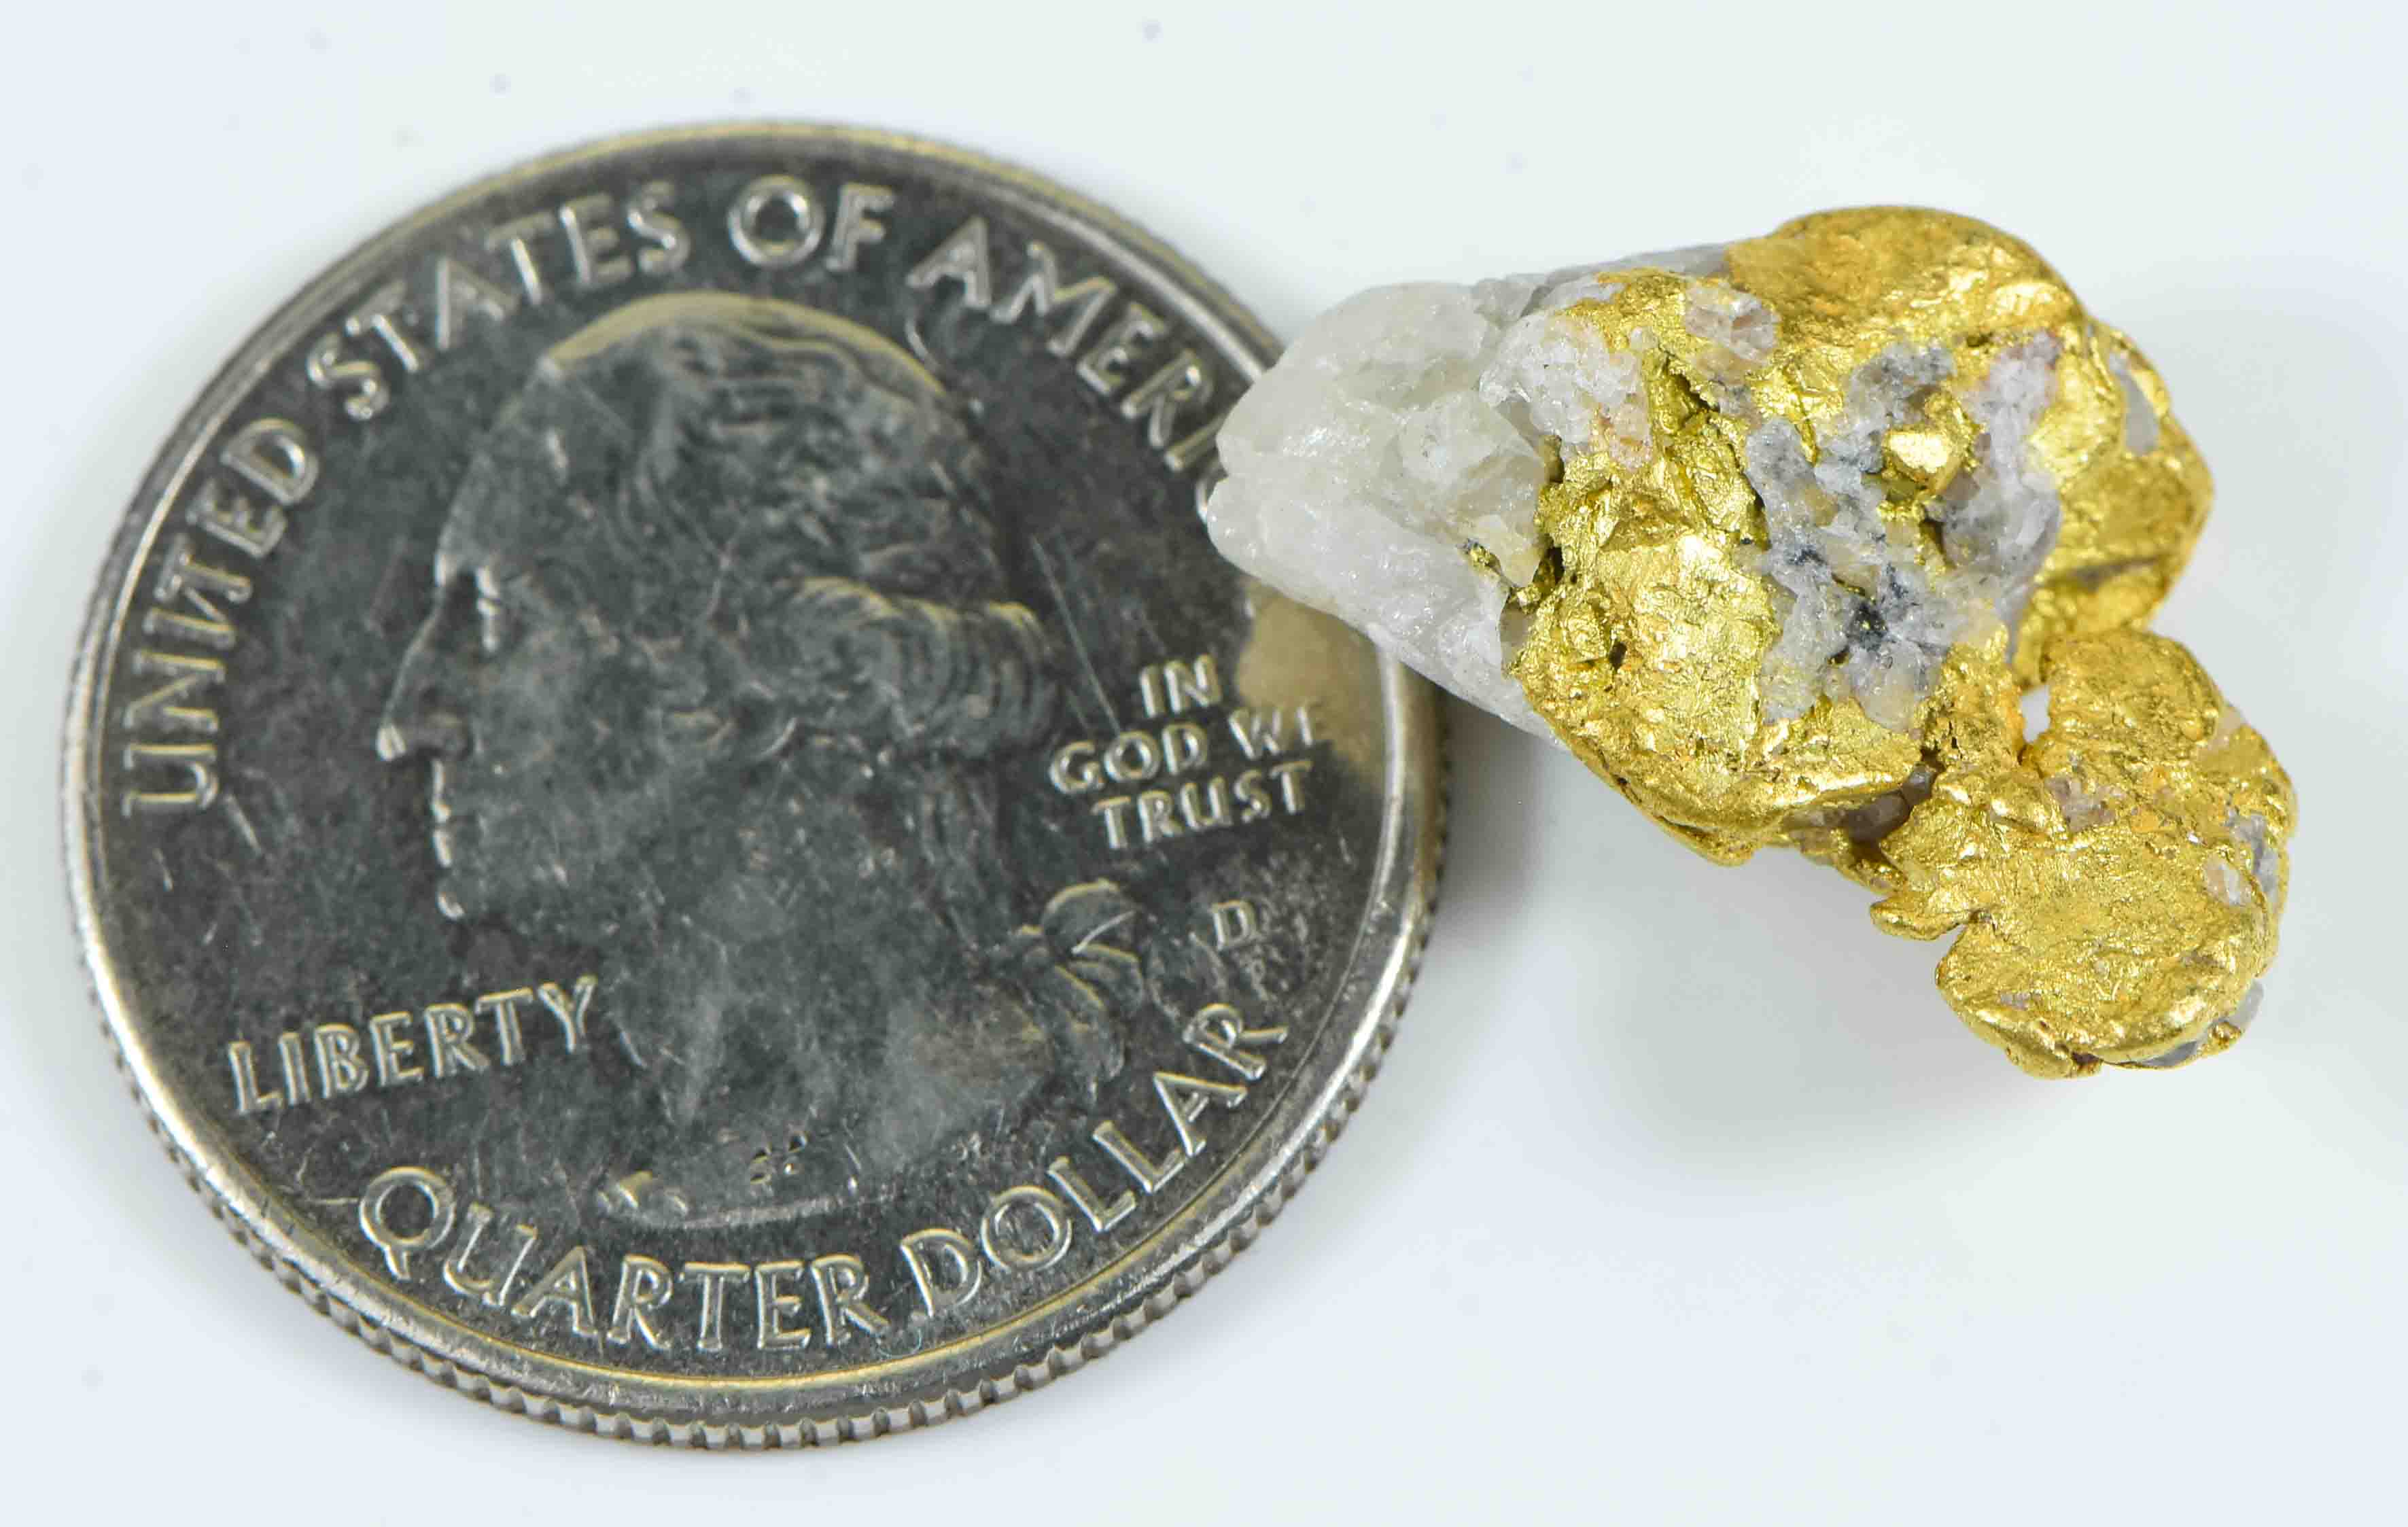 QN-80 "Alaskan BC Gold Nuggets with Quartz" Genuine 6.27 Grams